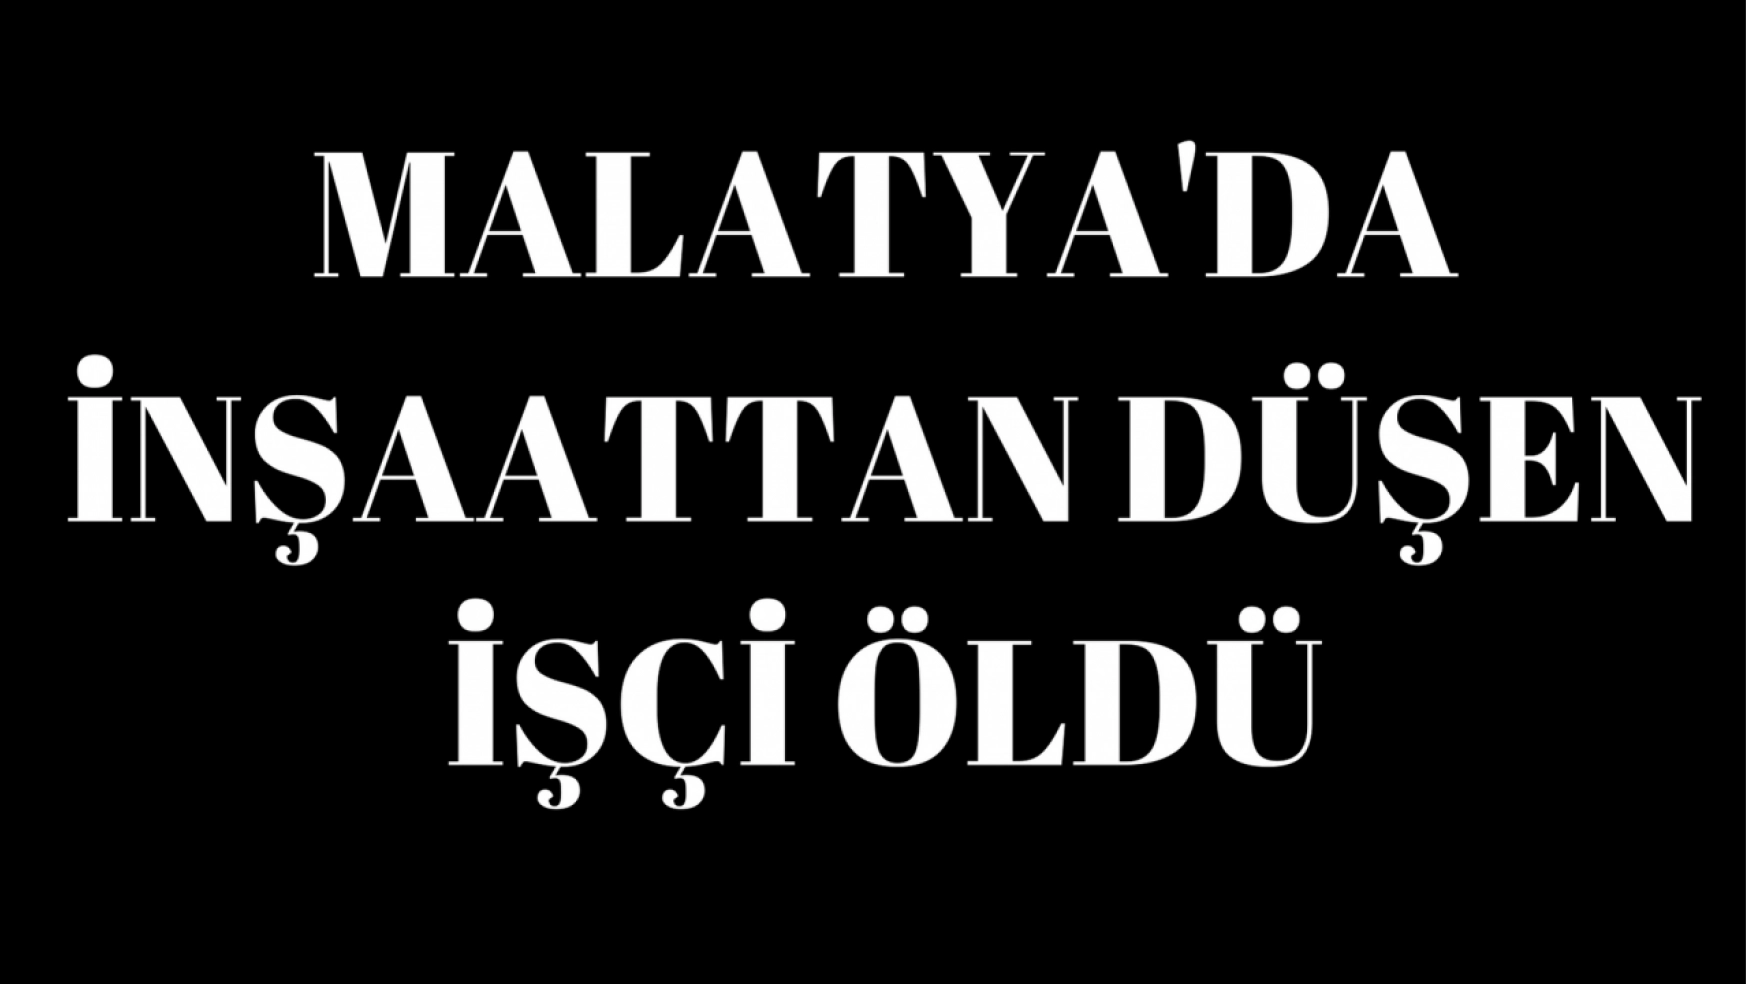 Malatya'da inşaattan düşen işçi öldü